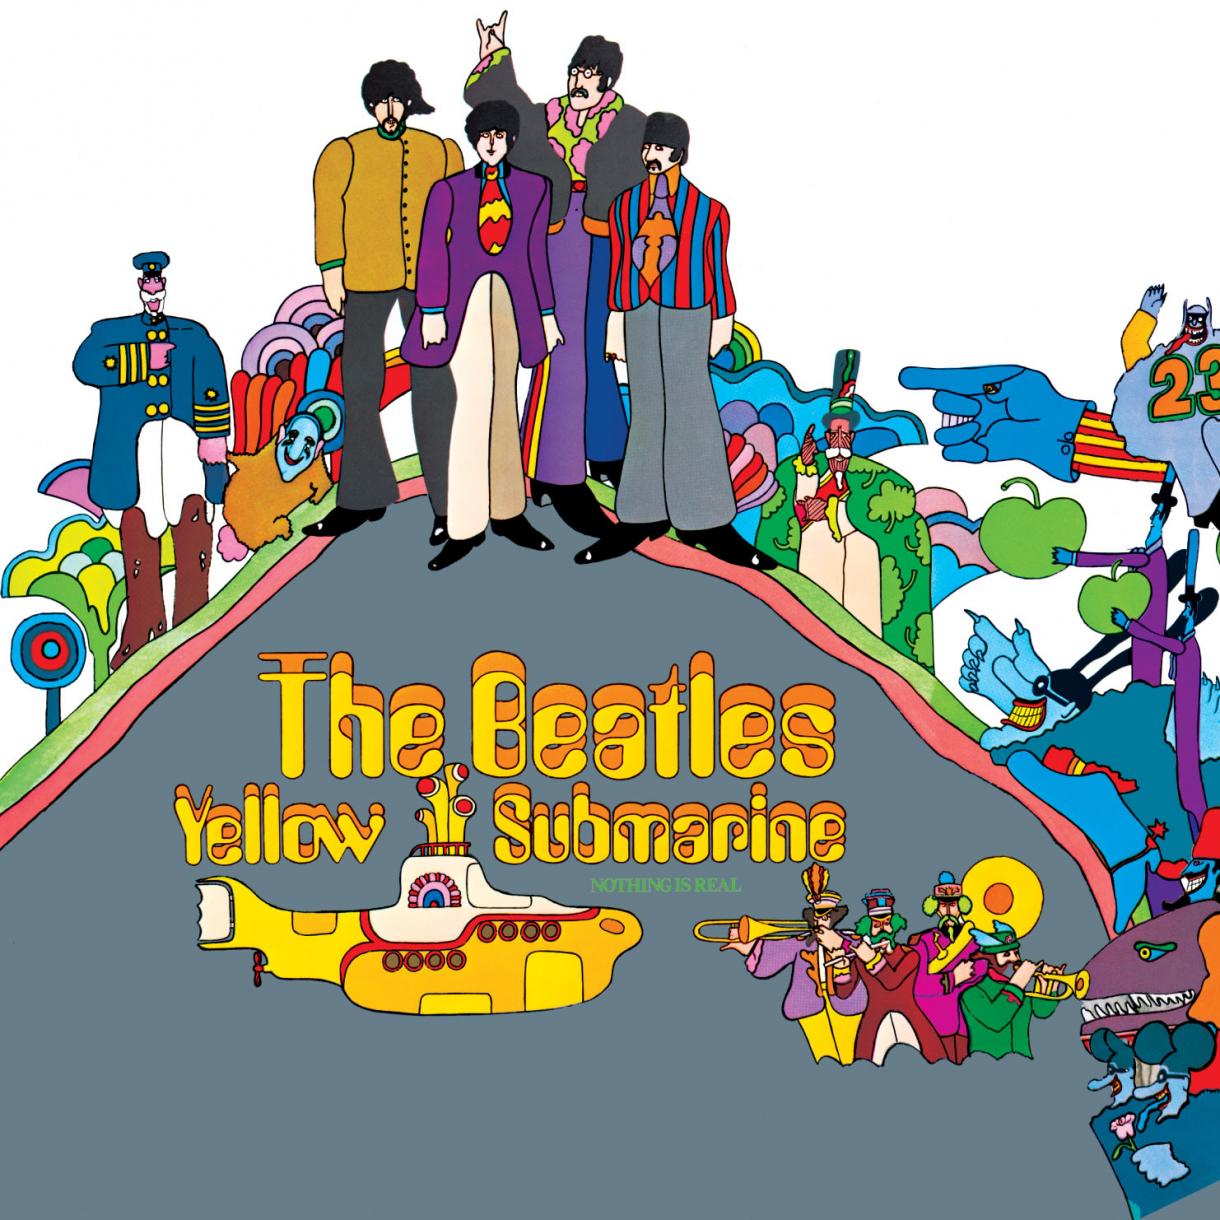 THE BEATLES - Yellow Submarine (Stereo Remaster) - LP - 180g Vinyl